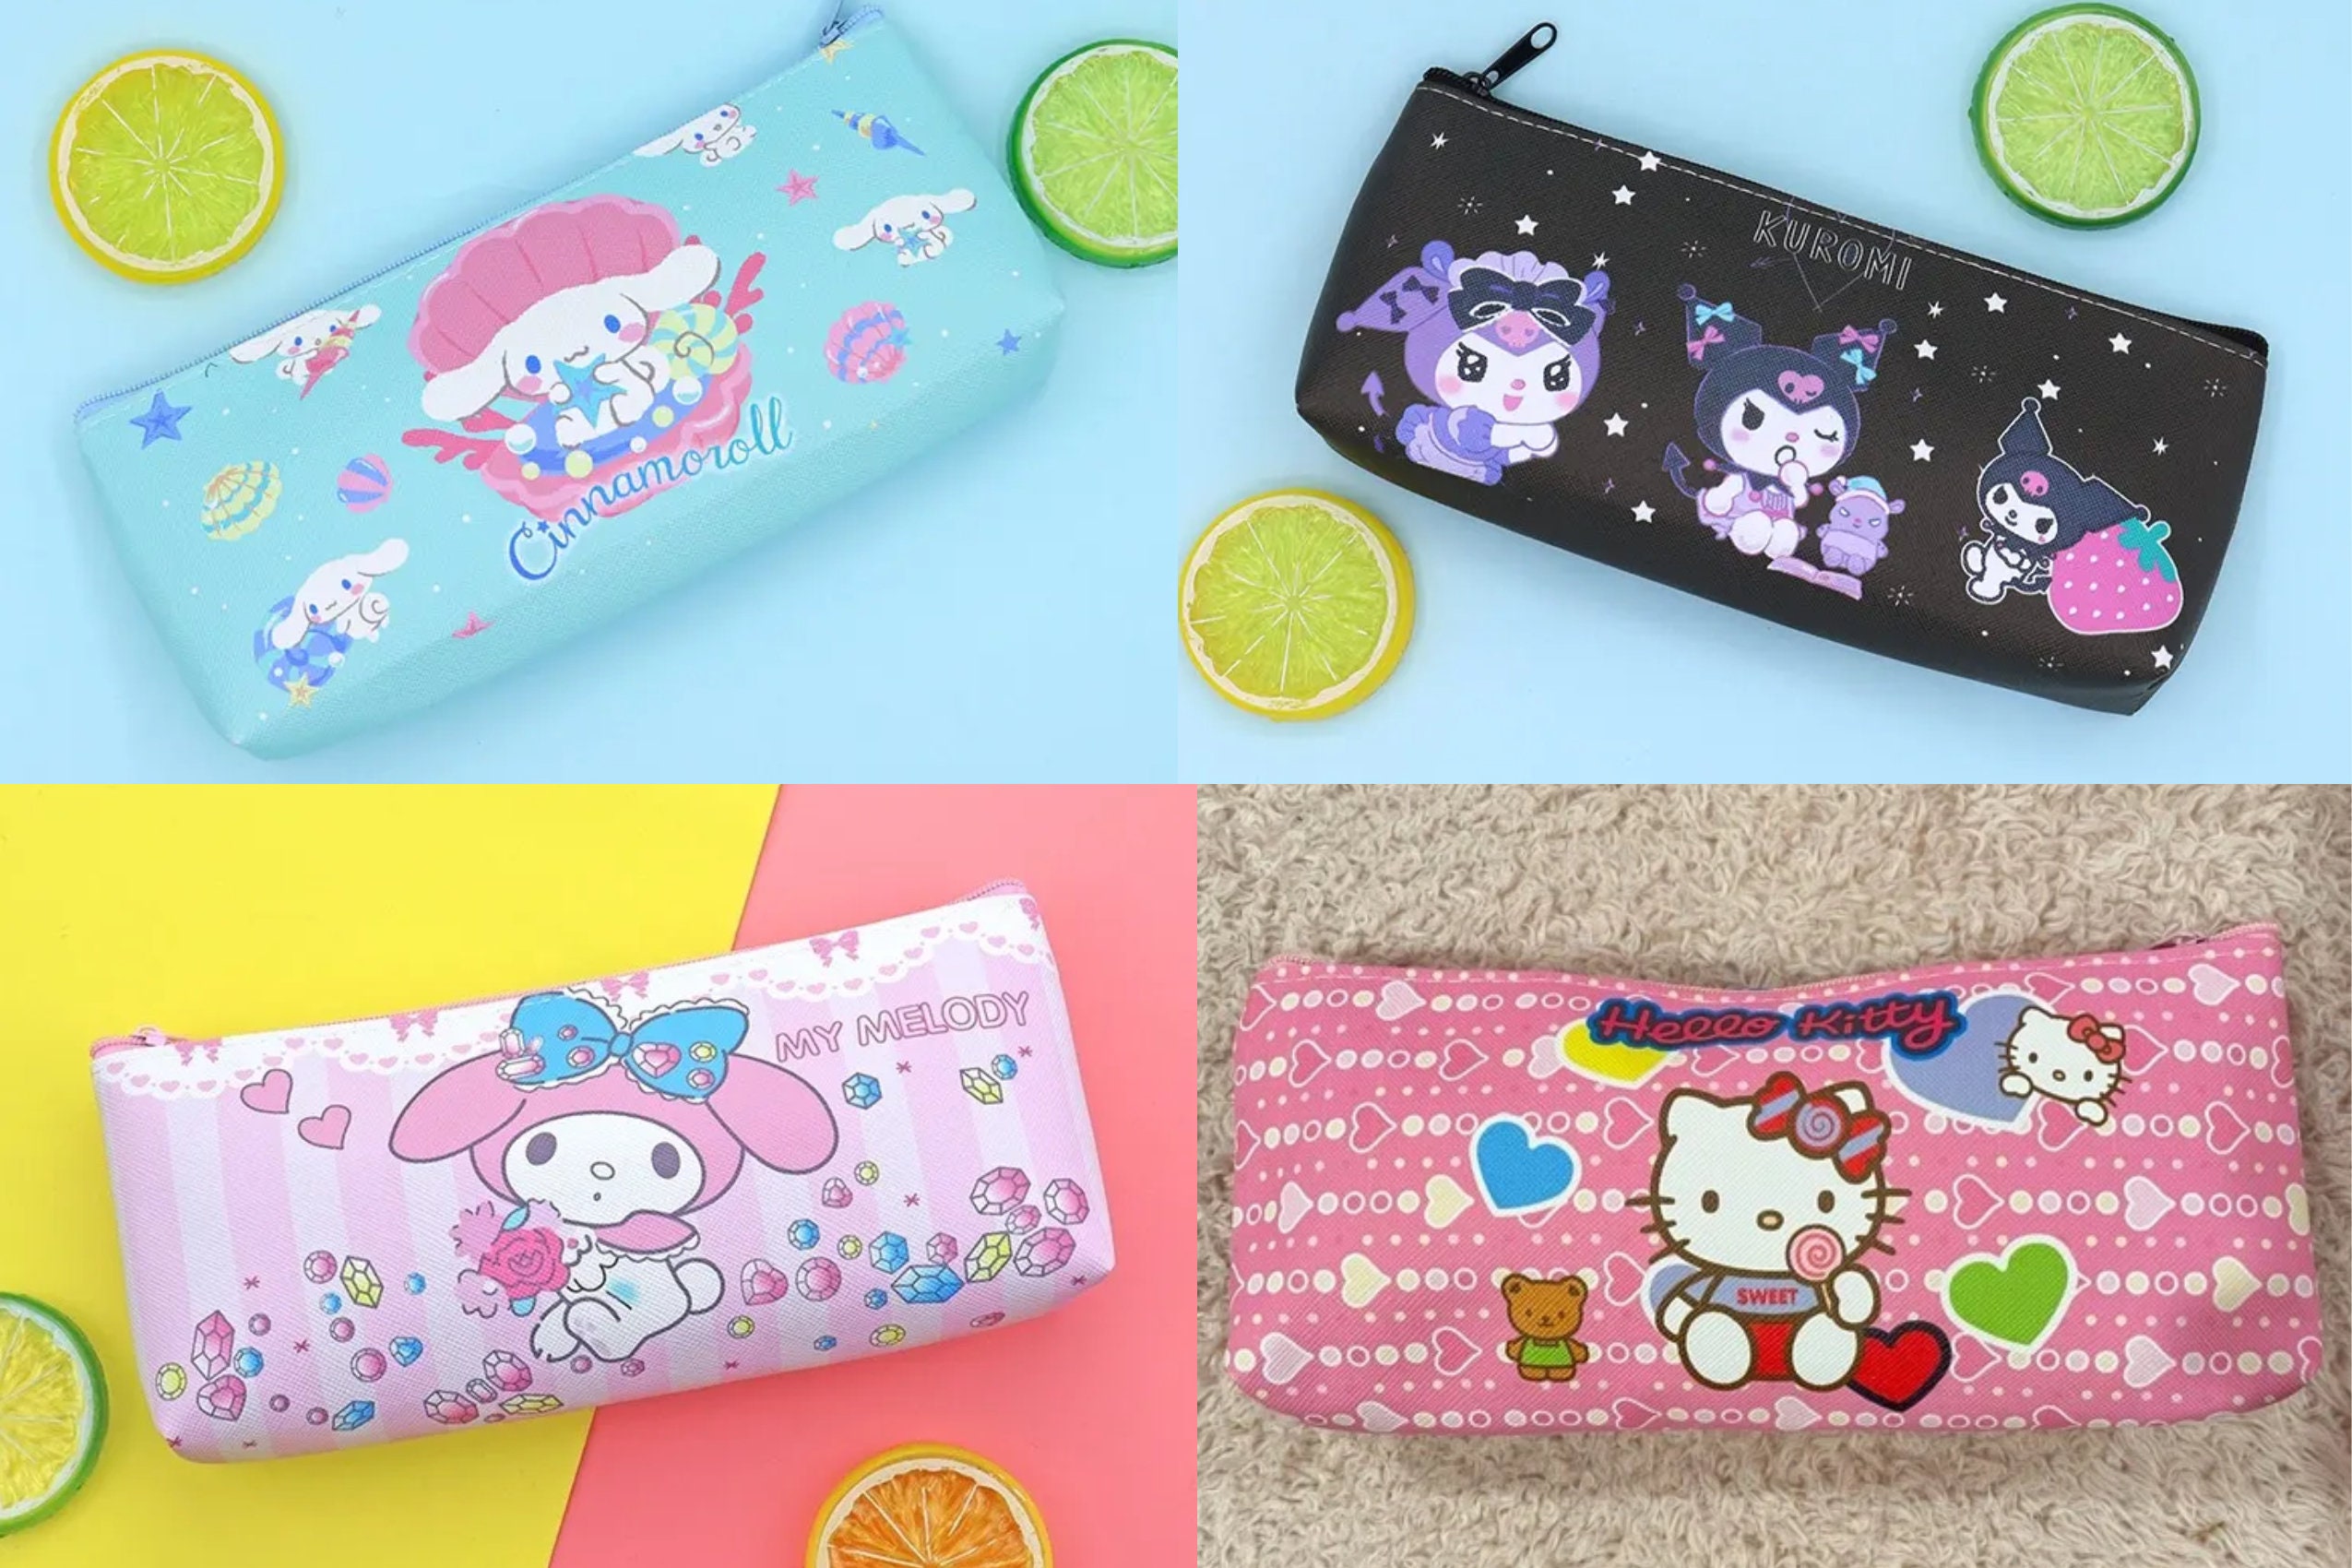 New Hello Kitty Cinnamoroll My melody Sanrio anime cartoon cute coin purse  creative kawaii storage bag personalized pendant gift